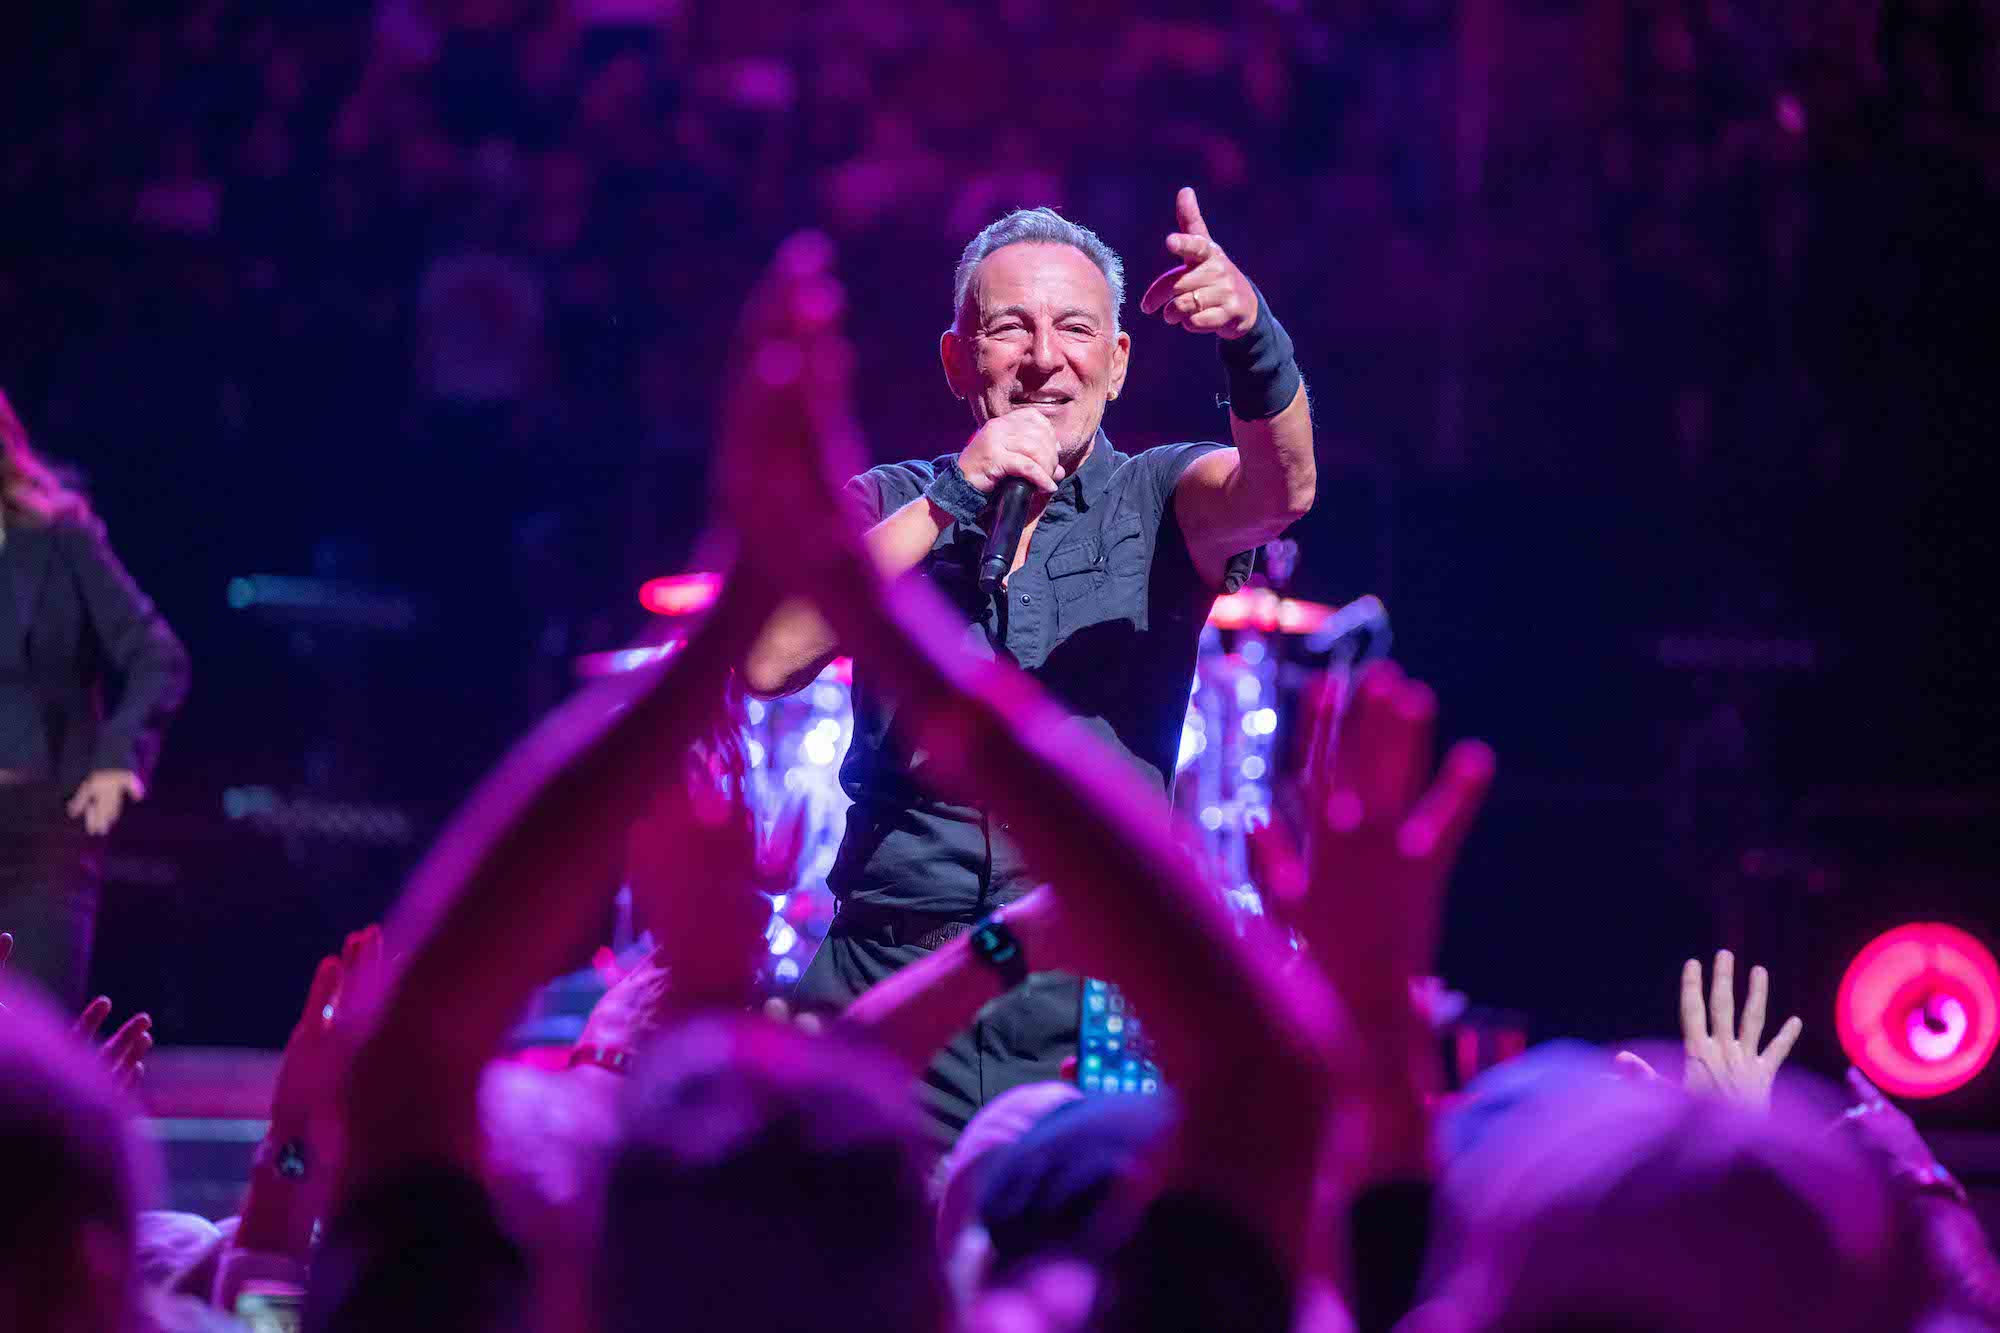 Bruce Springsteen & E Street Band at Toyota Center, Houston, Texas on February 14, 2023.